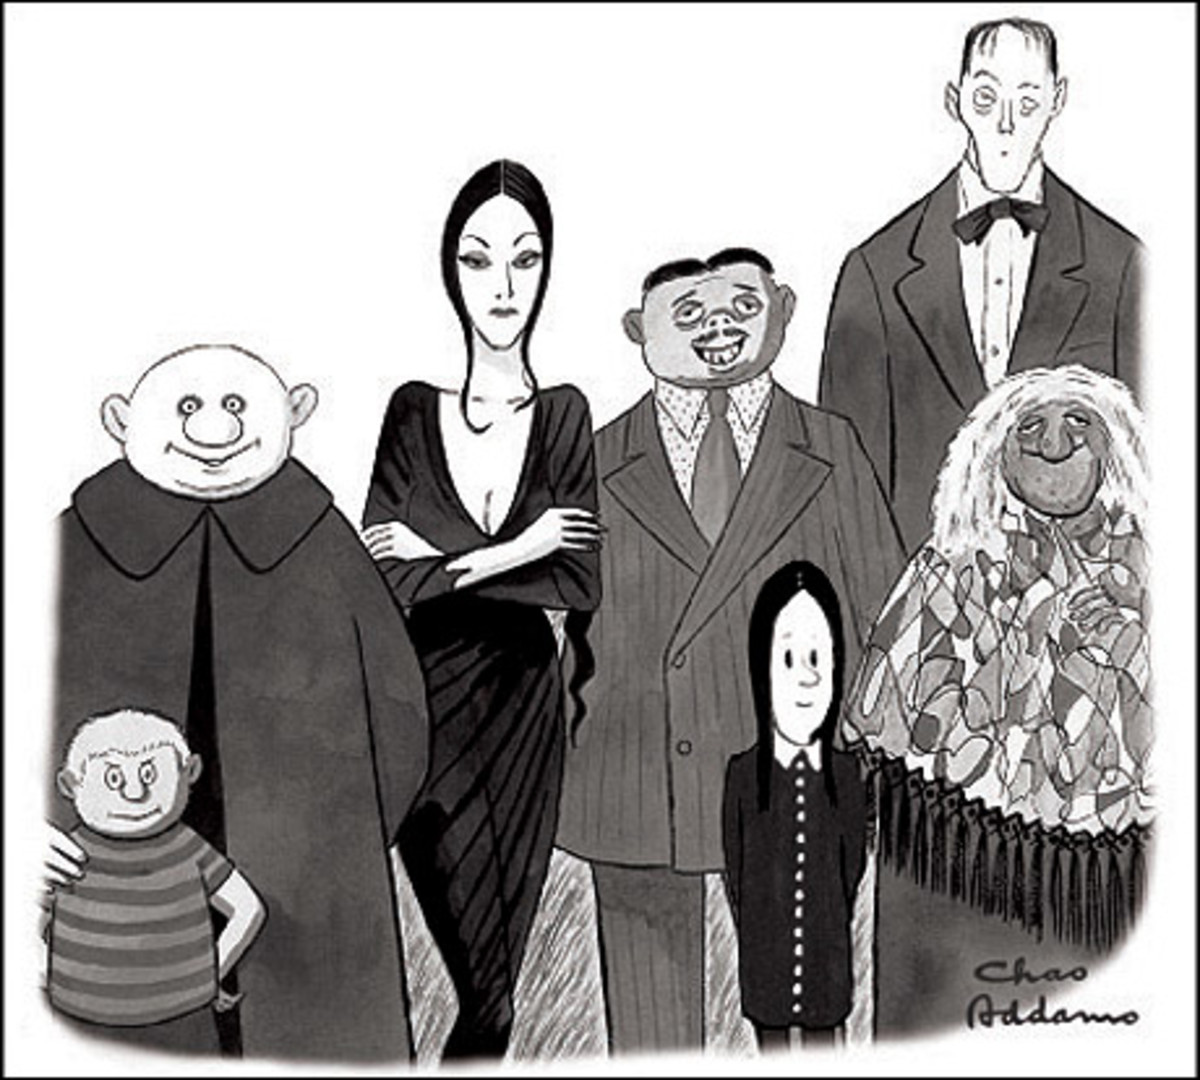 Os elementos da Família Addams